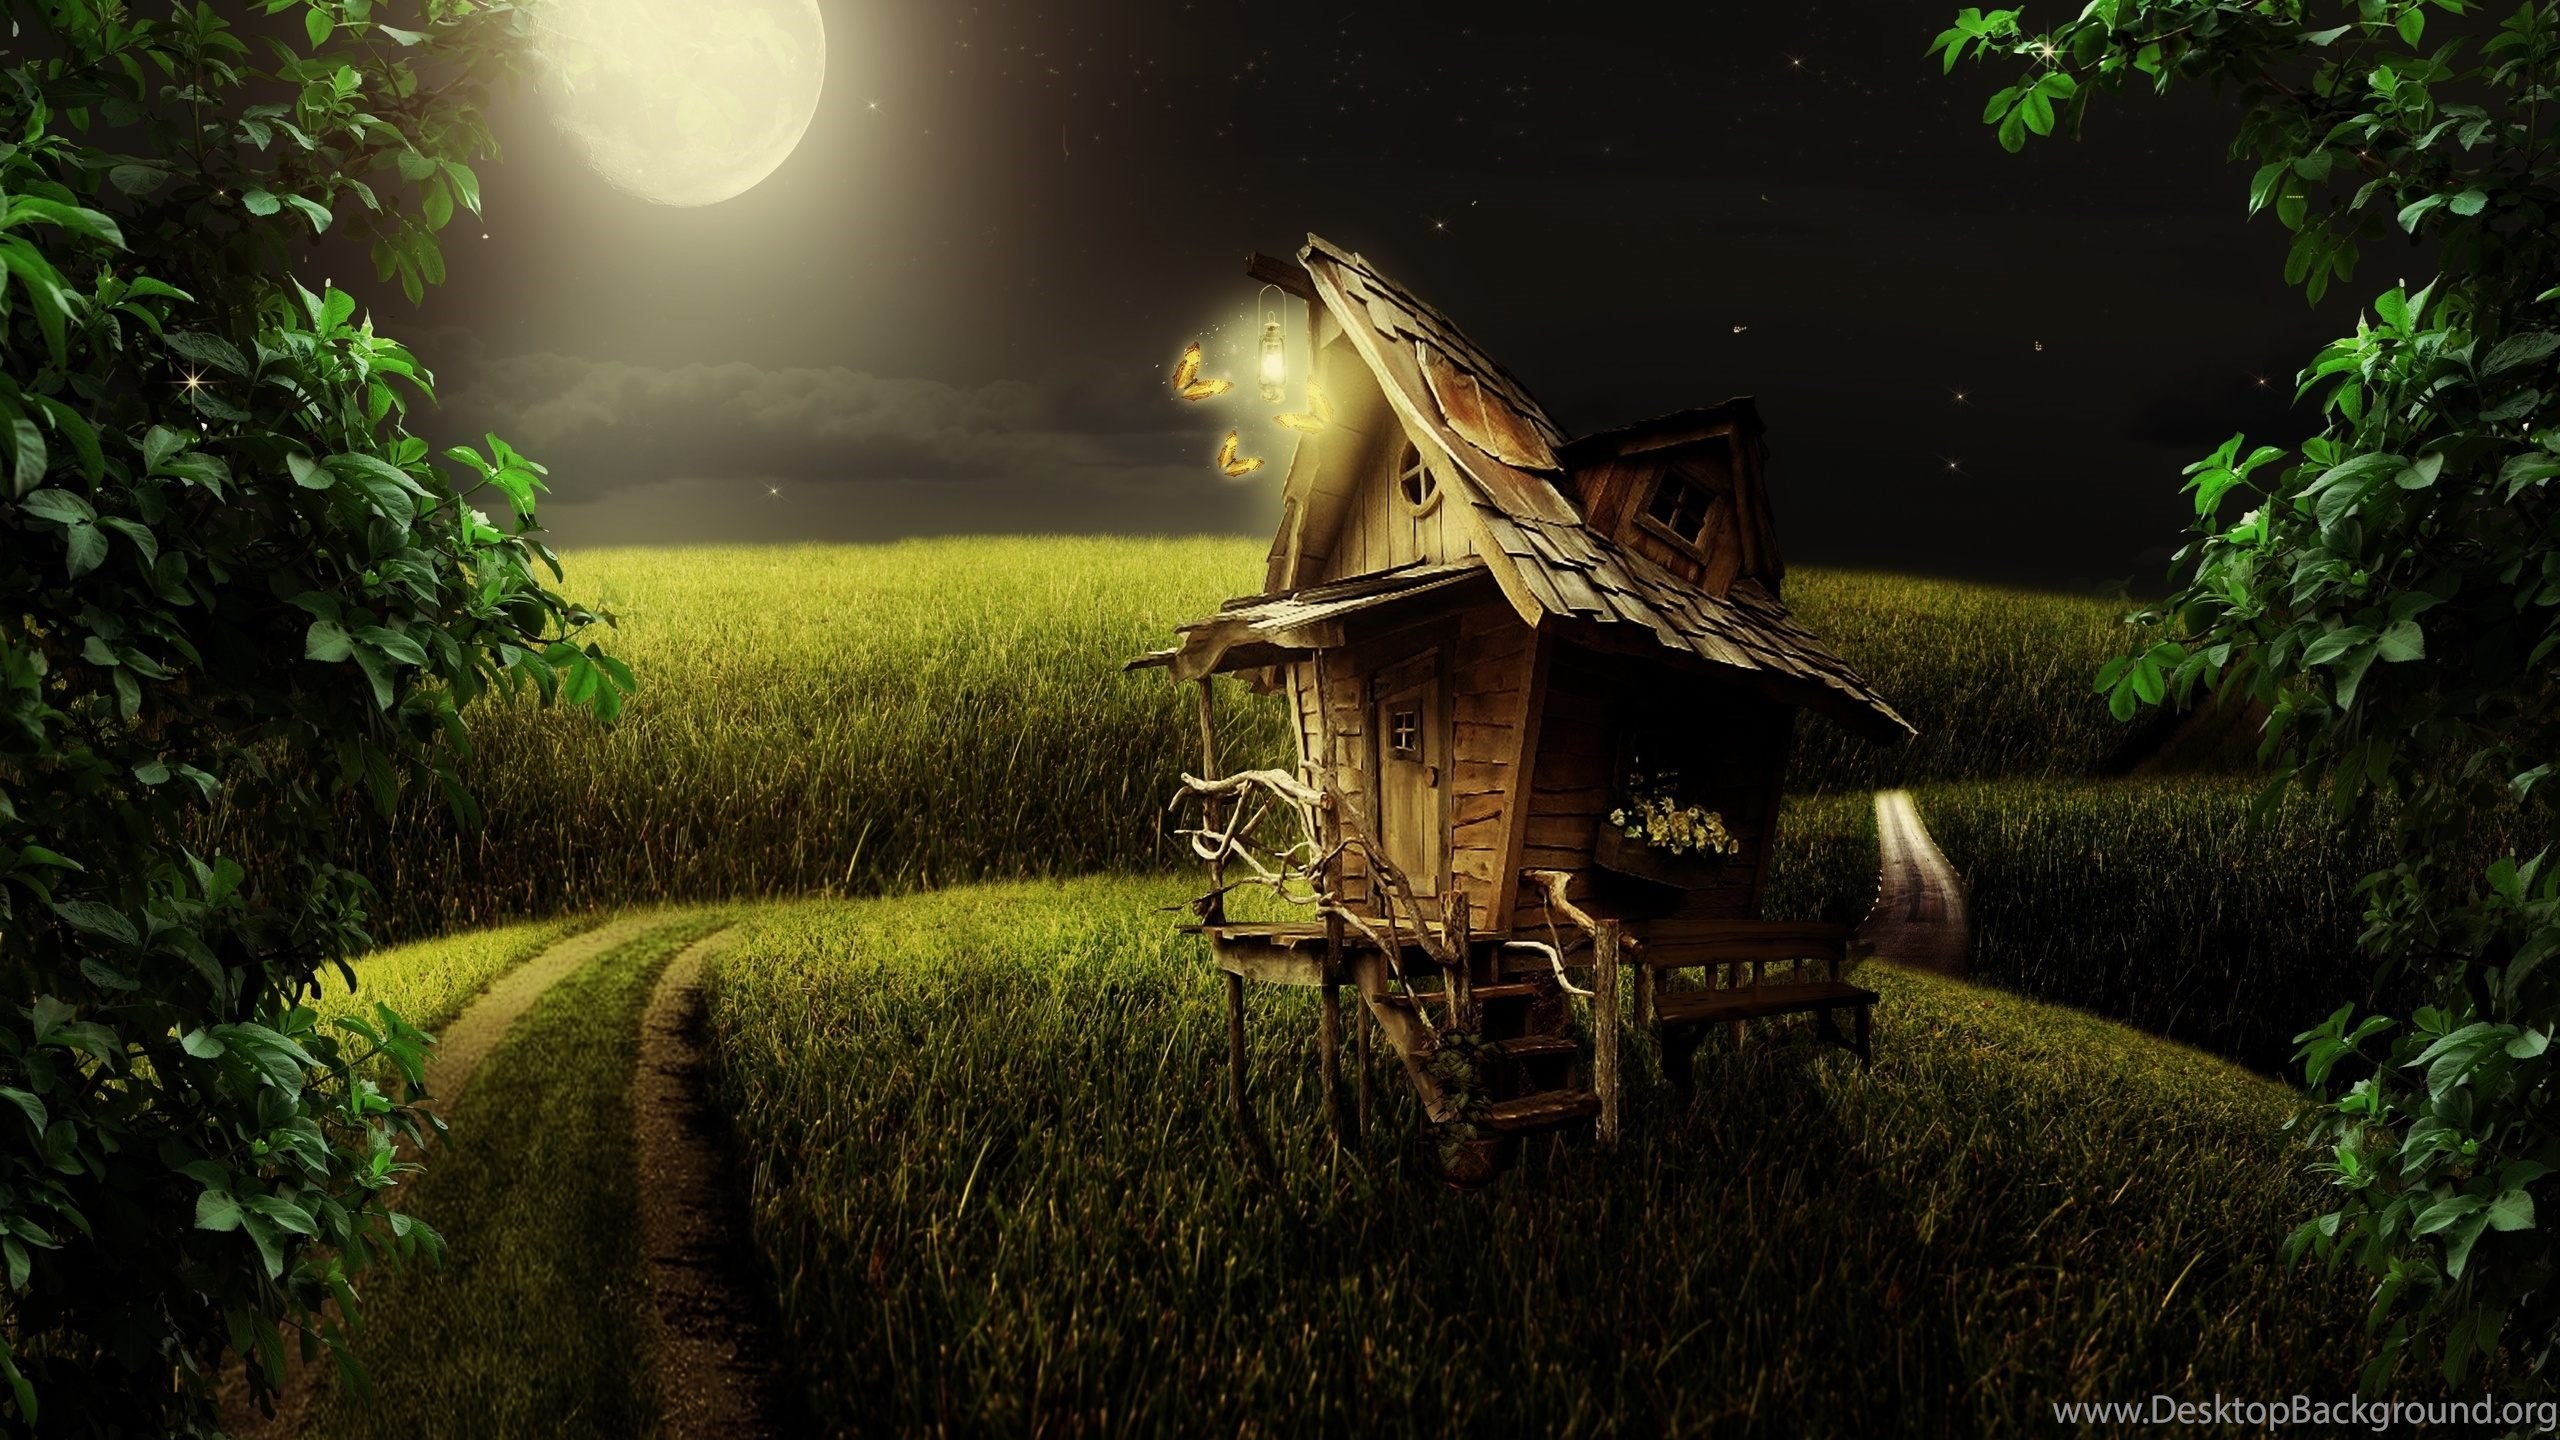 Night Moon Fantasy Landscape Wallpapers HD Free Download Desktop Background